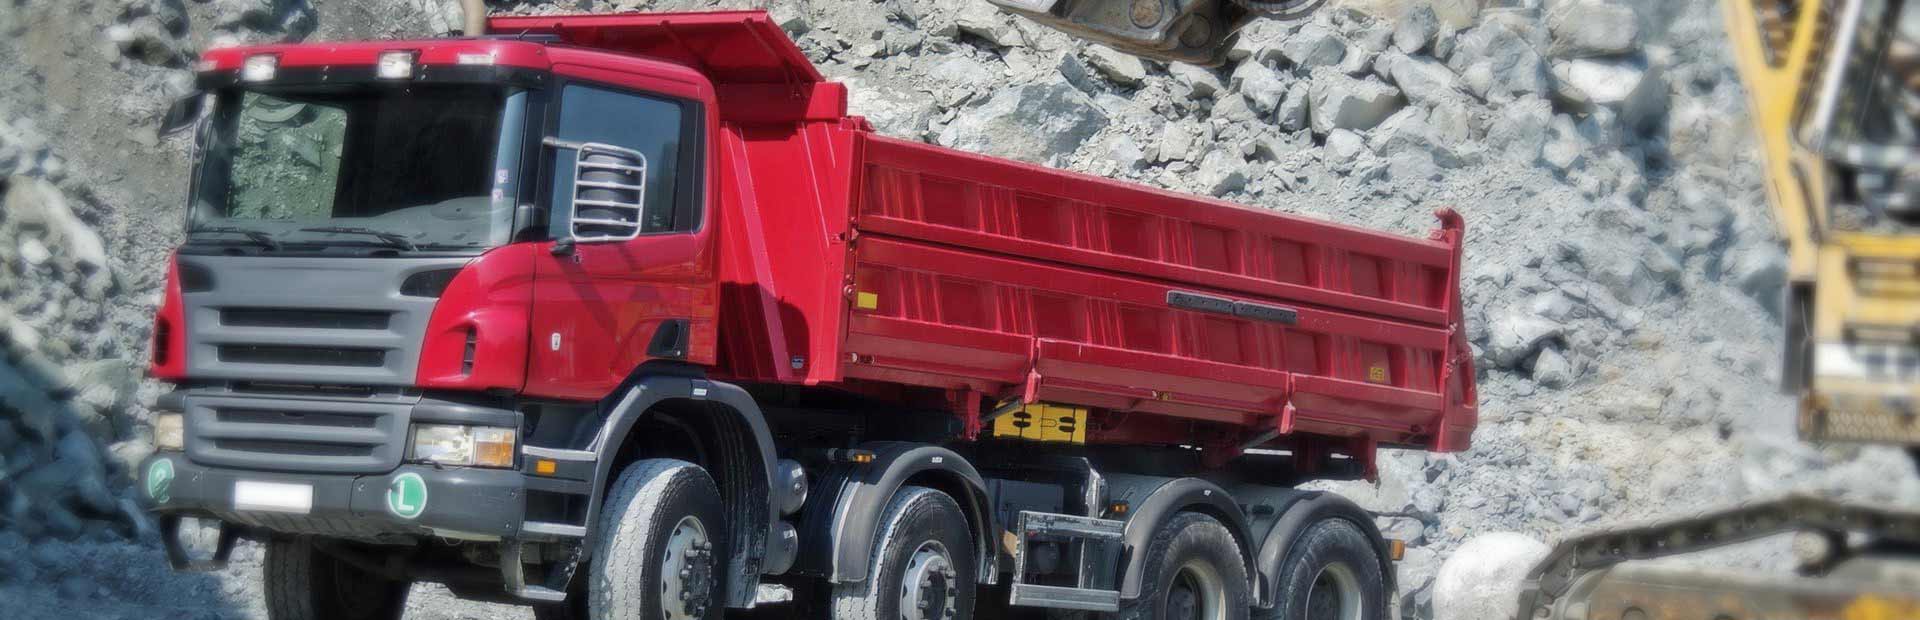 Dump truck at a quarry